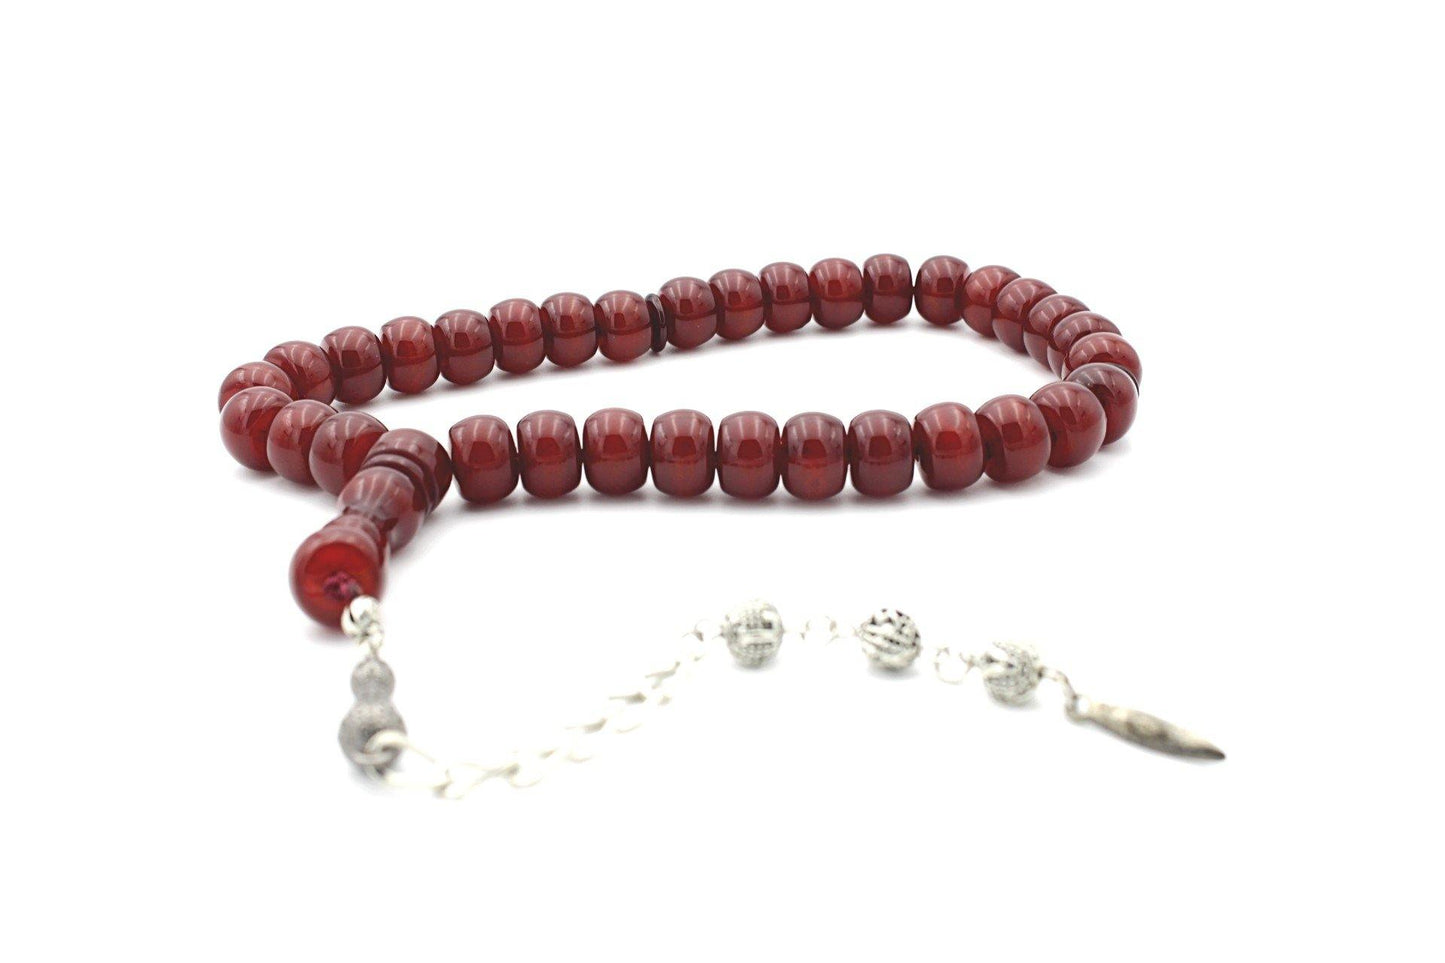 bakelite catalin prayer beads gemstones jewellery for sale tesbih shop